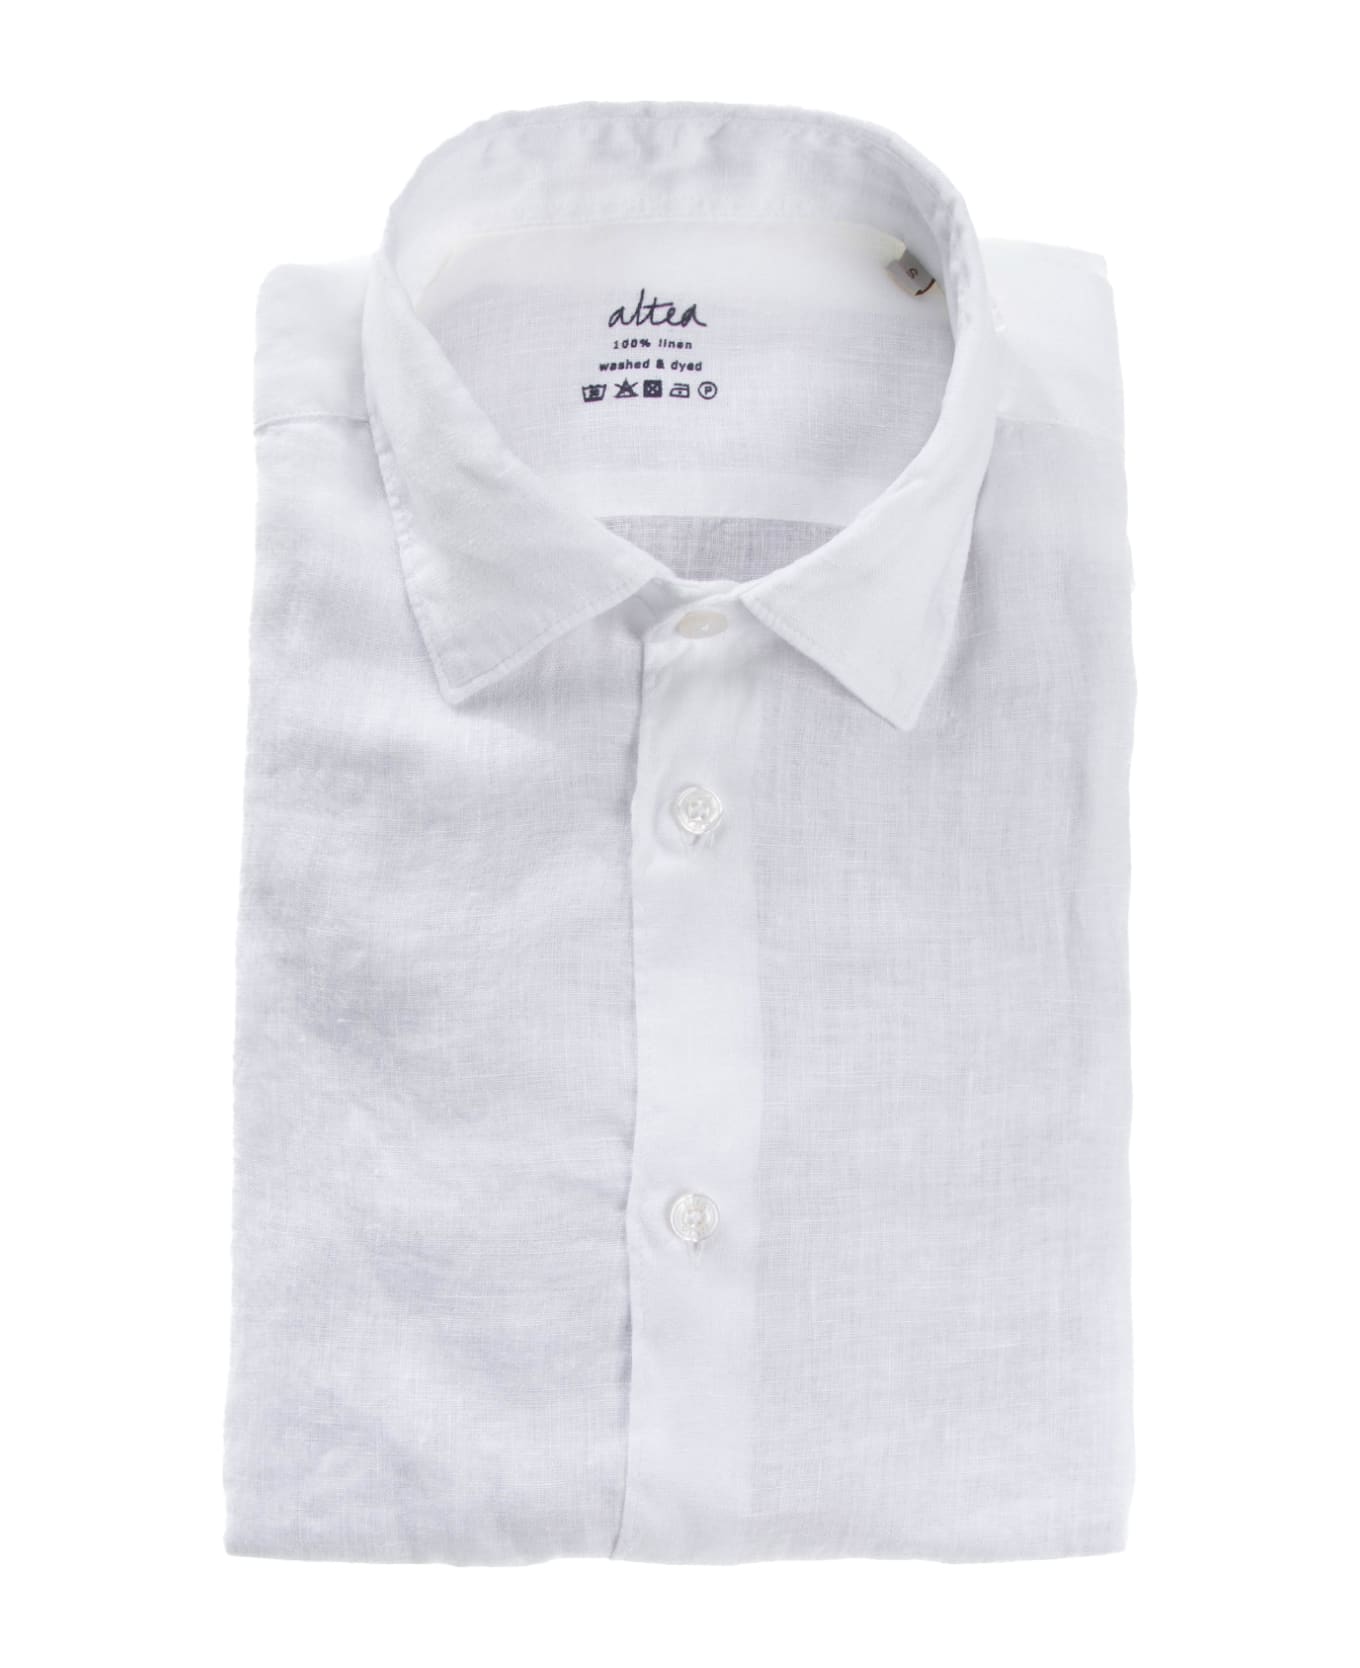 Altea Slim Fit Linen Shirt - BIANCO OTTICO